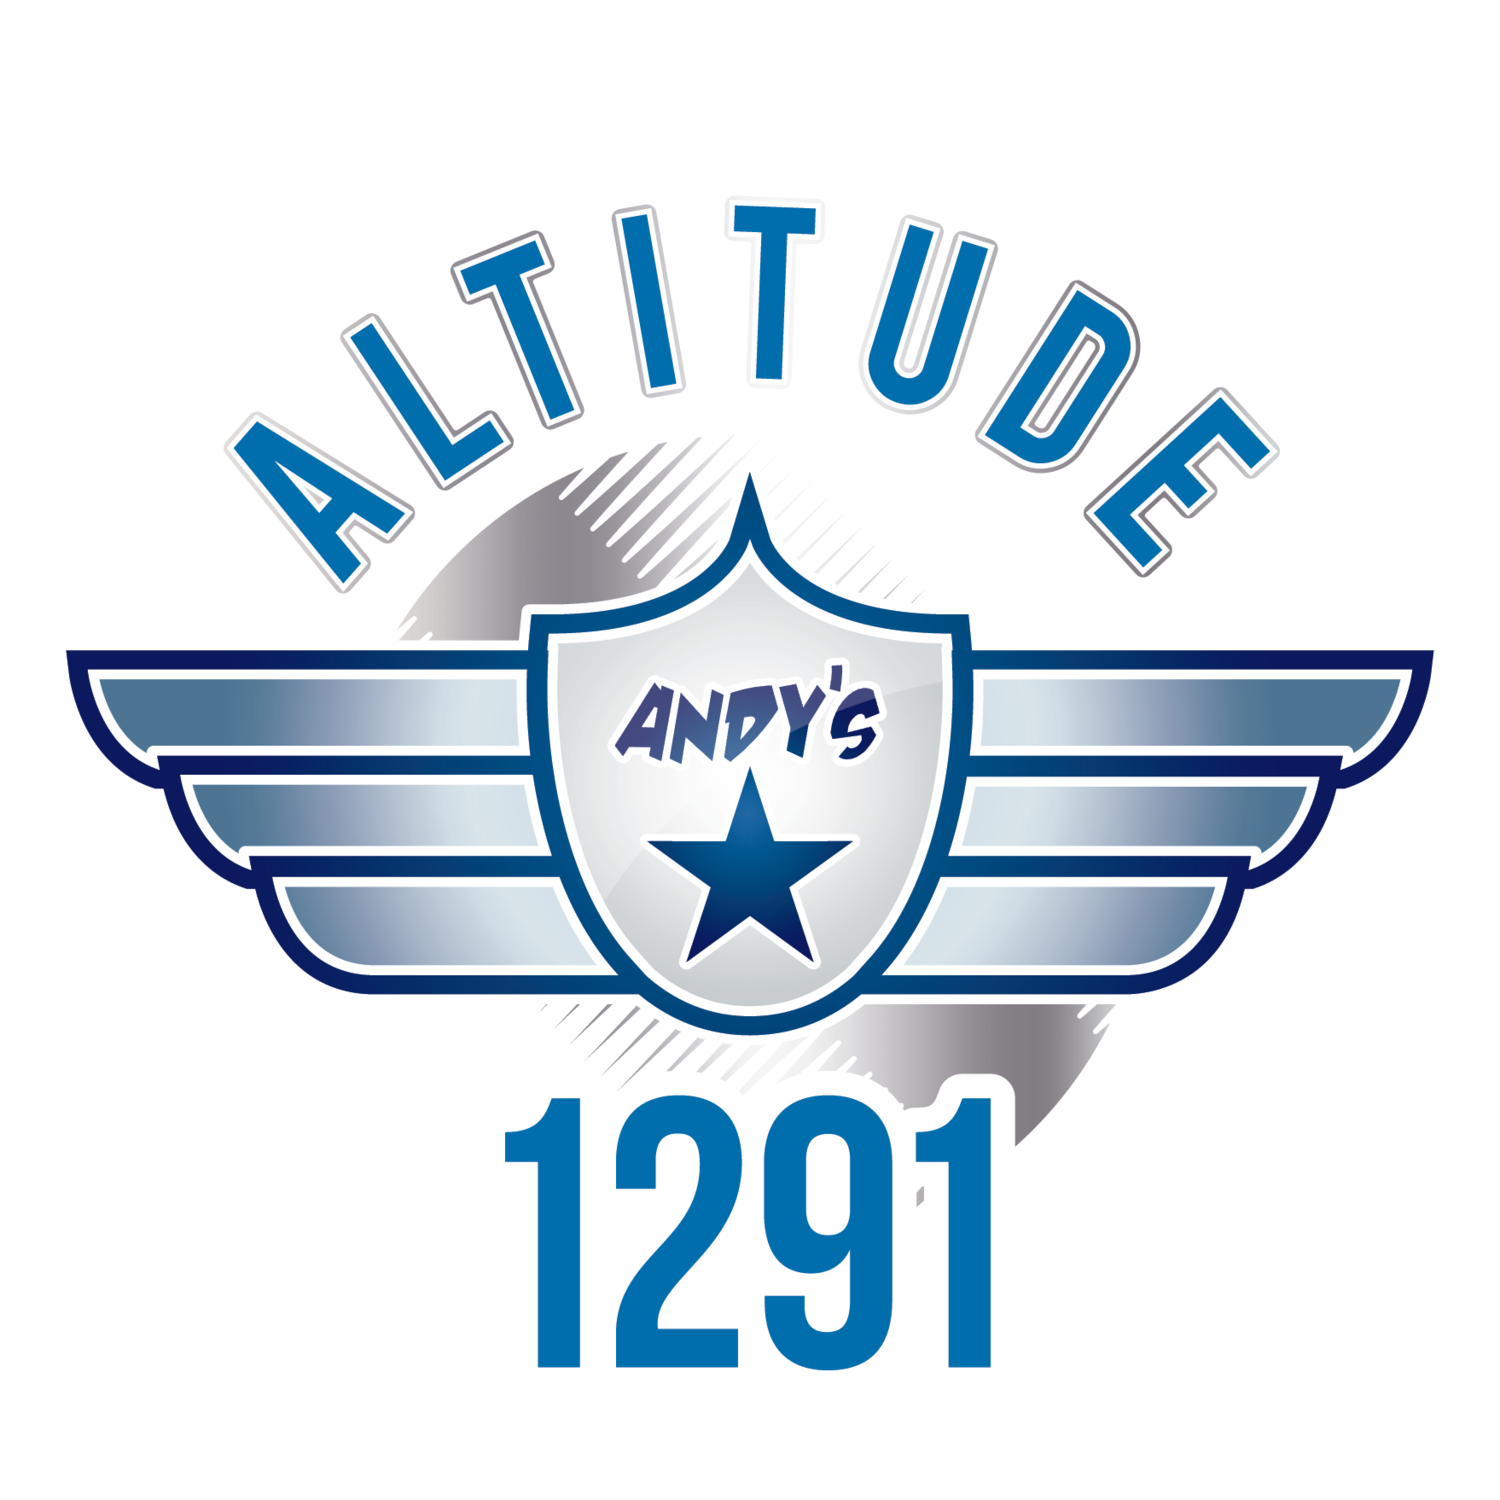 Altitude 1291